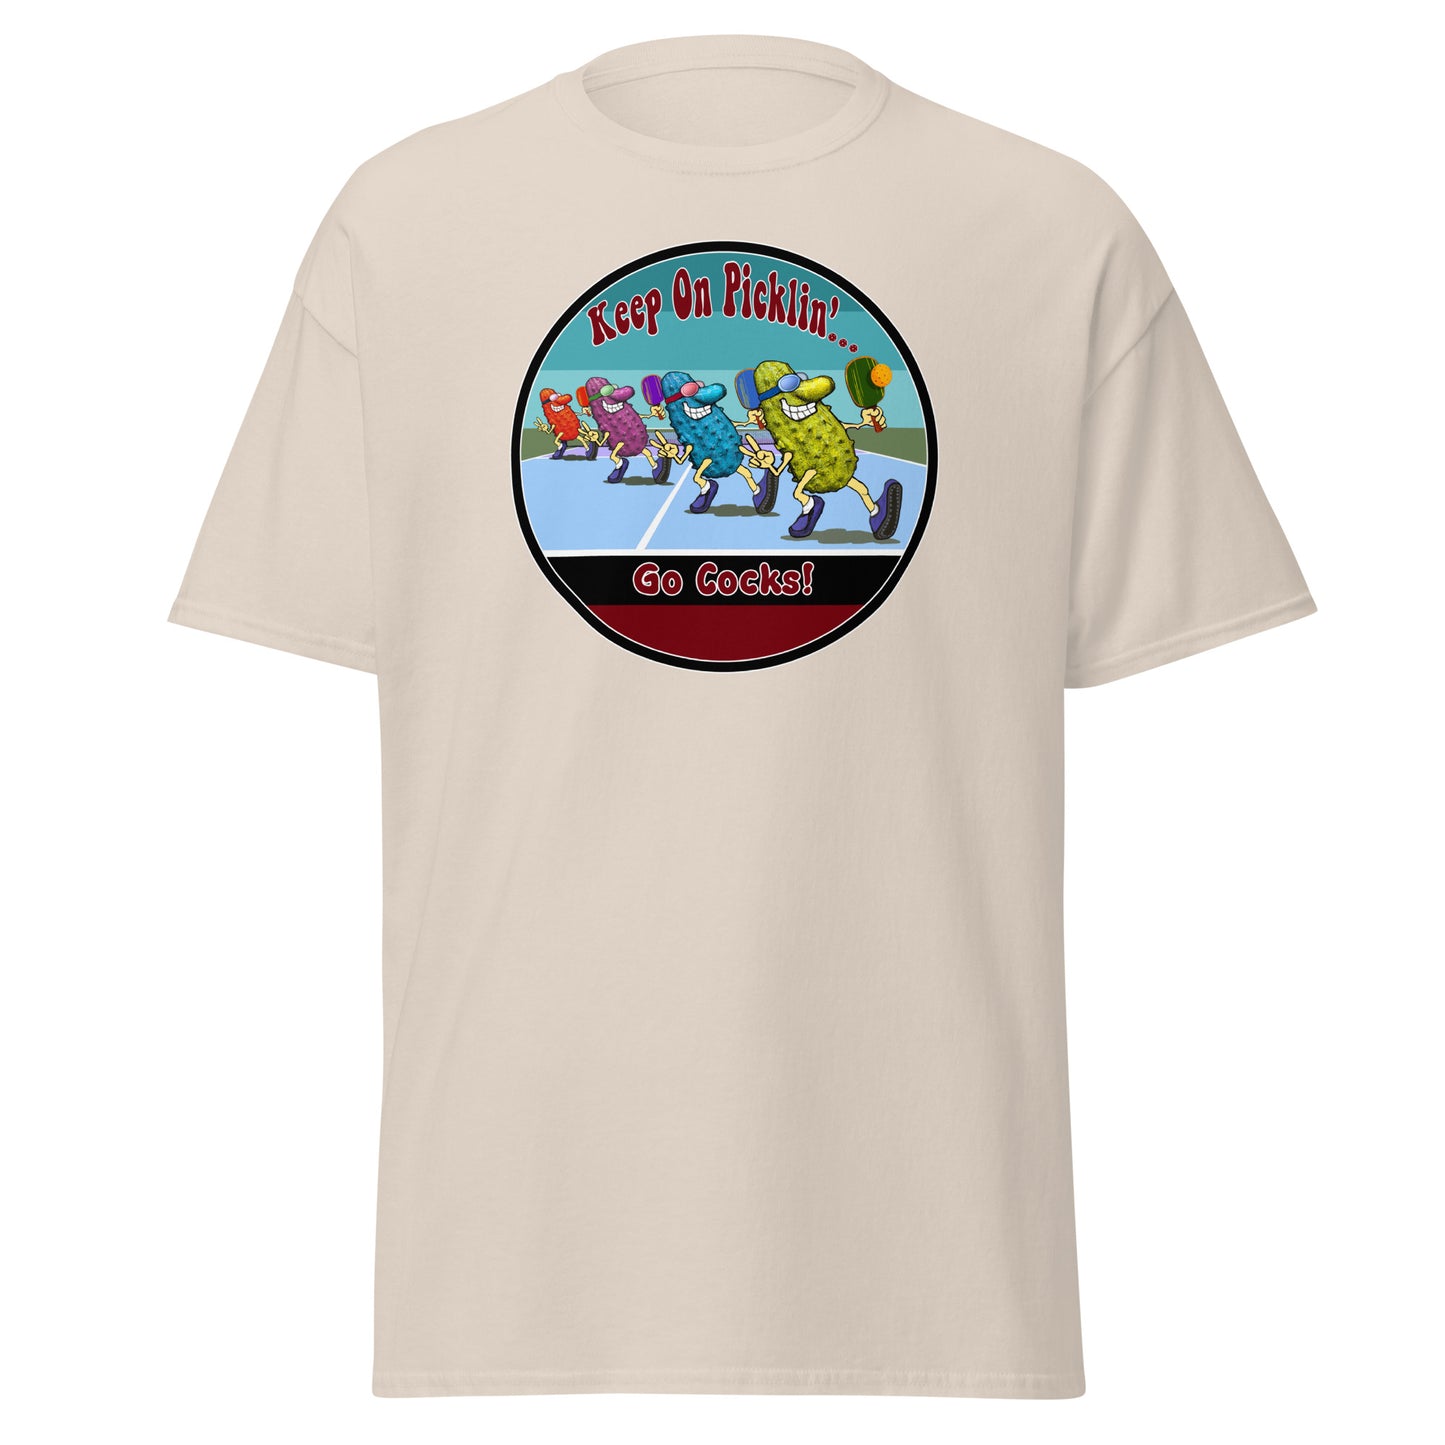 South Carolina Gamecocks Pickleball Shirt, Short-sleeve Tee, Retro Stripes Graphic